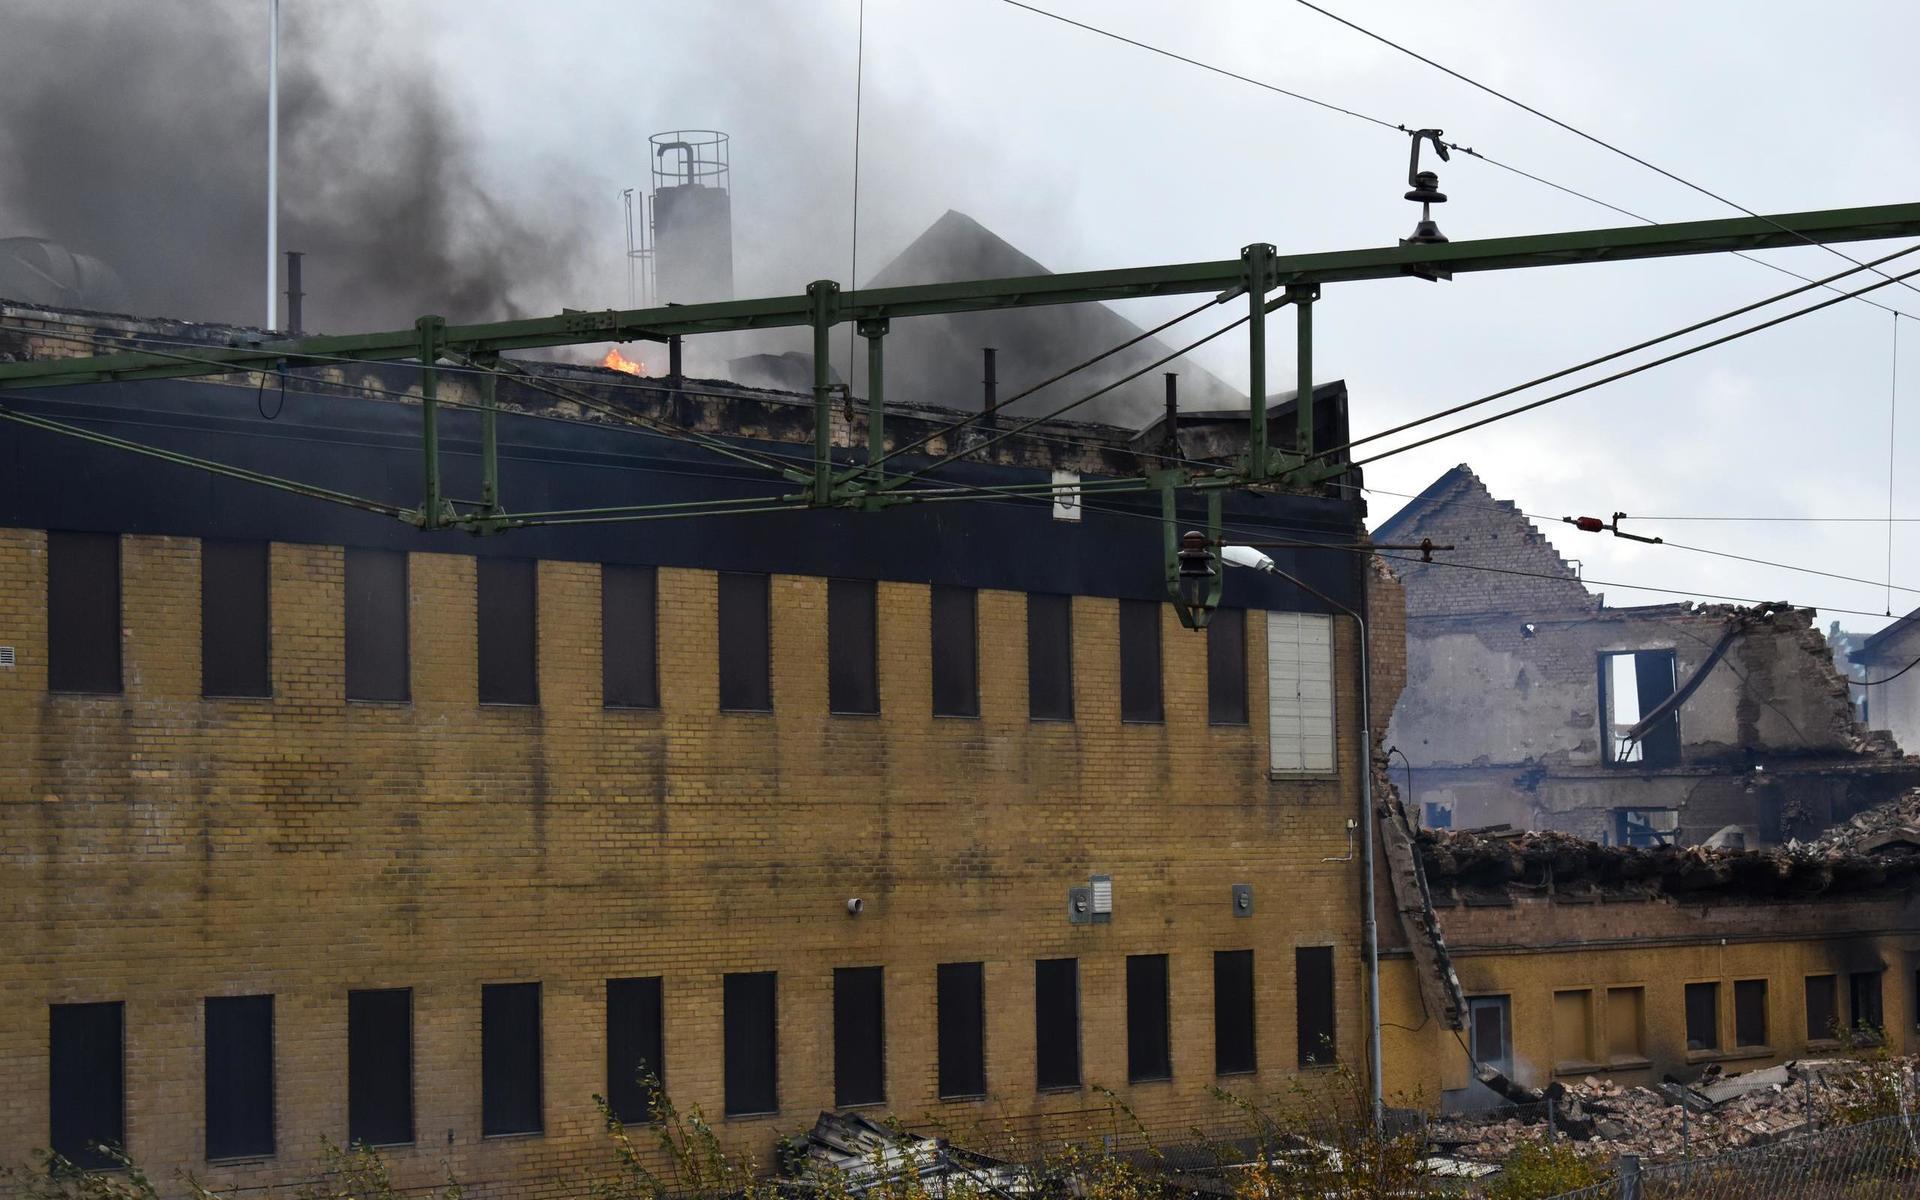 Brand i industrilokal i LysekilSillfabrik